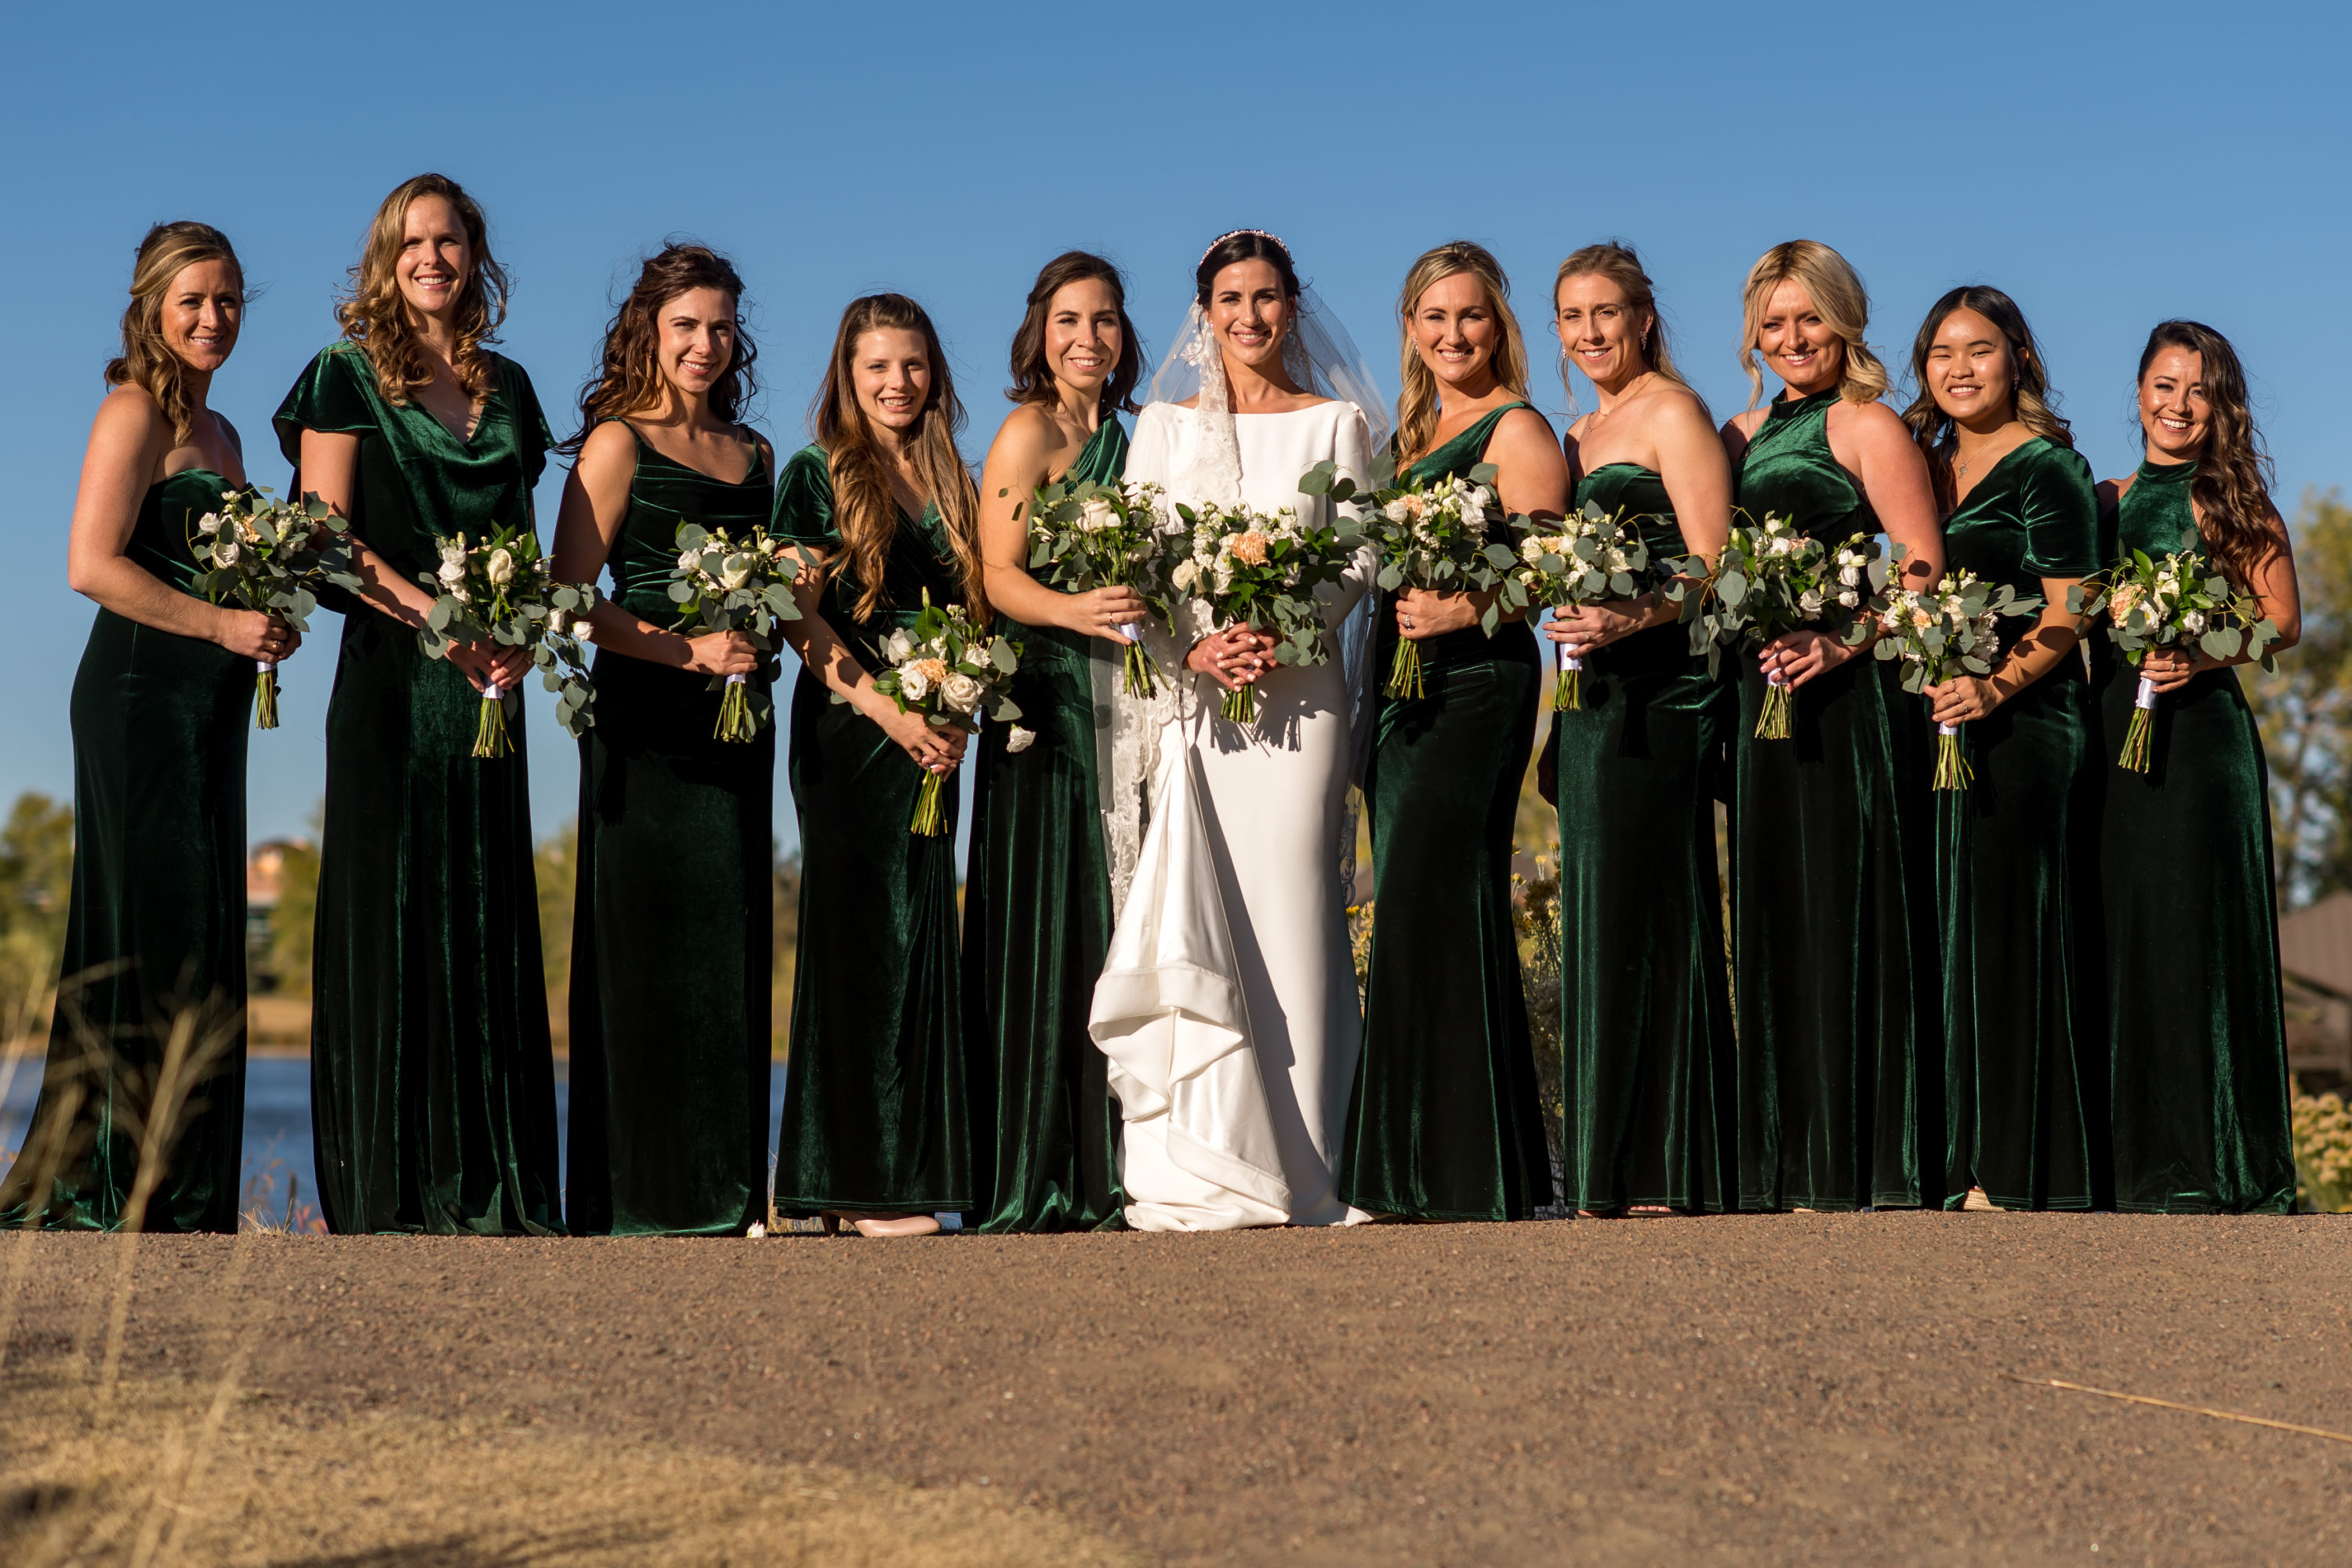 Bride and bridesmaids pose during wedding photo portraits at Belmar Park in Lakewood, Colorado.